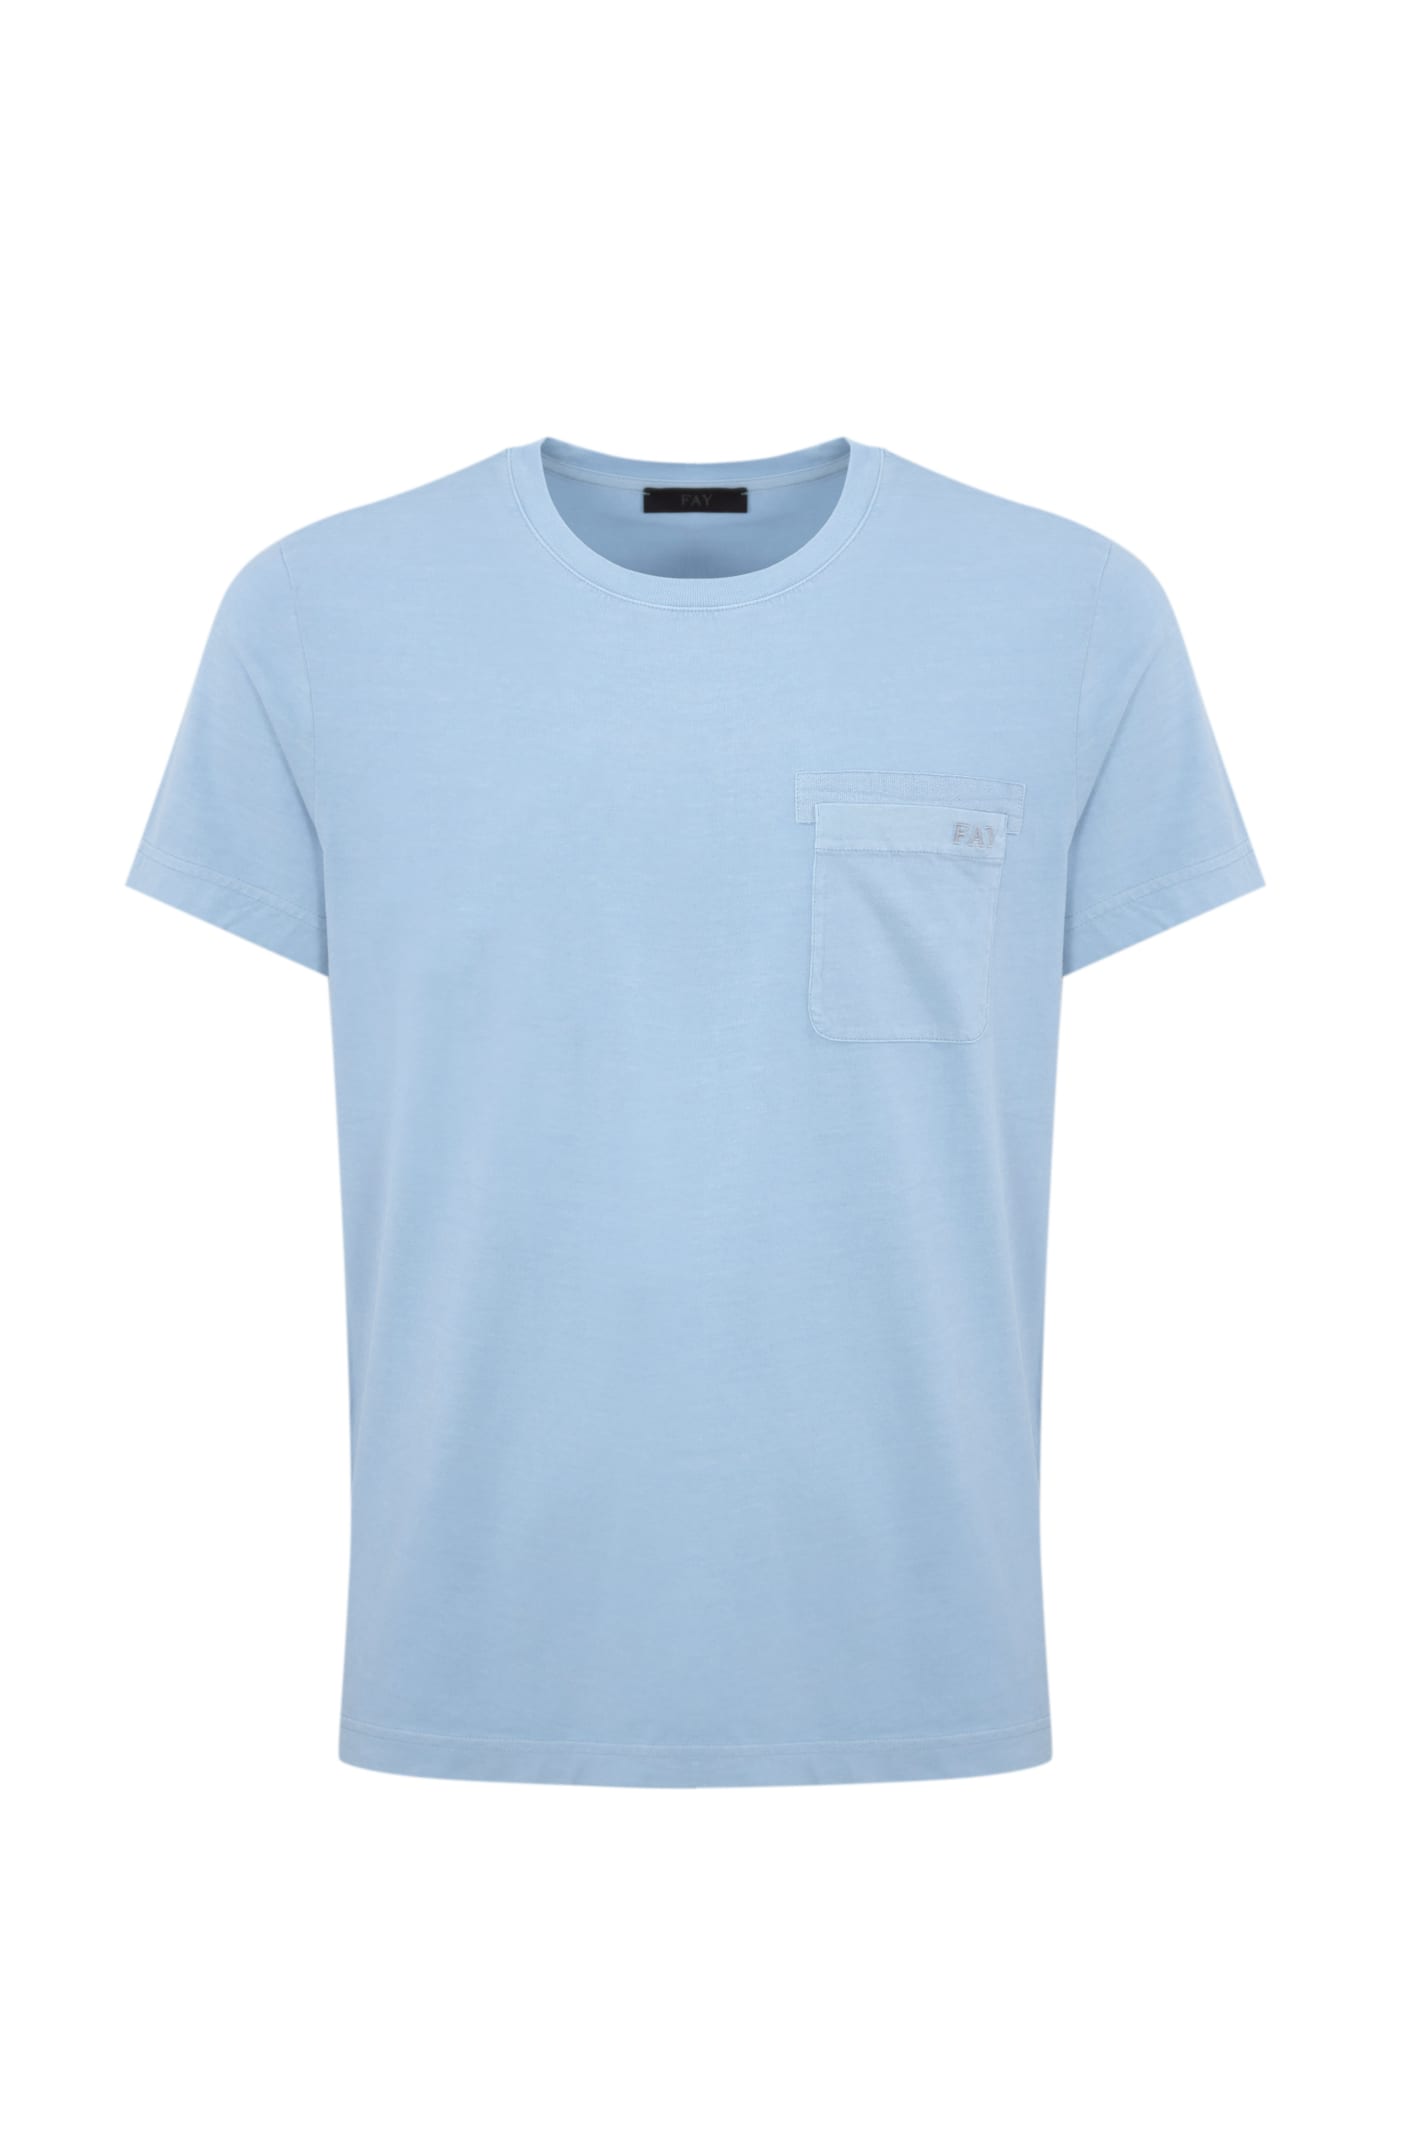 Fay T-shirt With Pocket In Azzurro